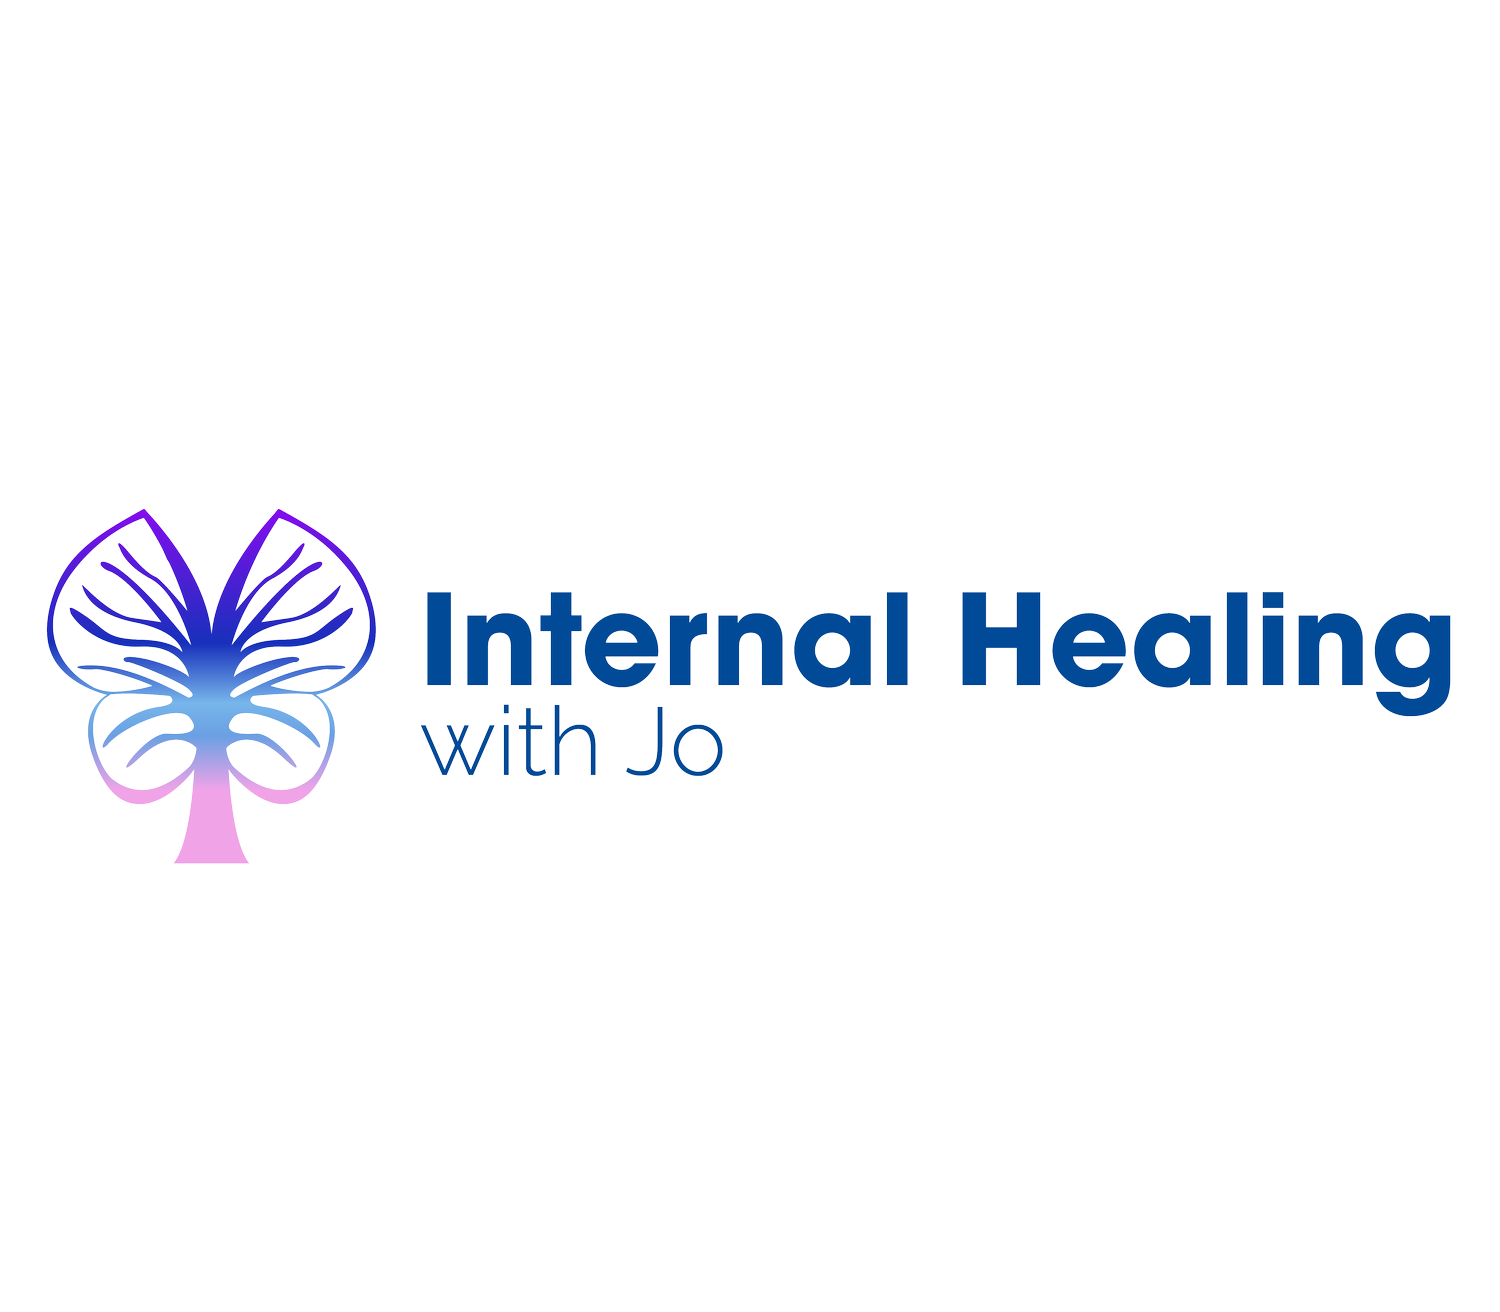 Internal Healing with Jo